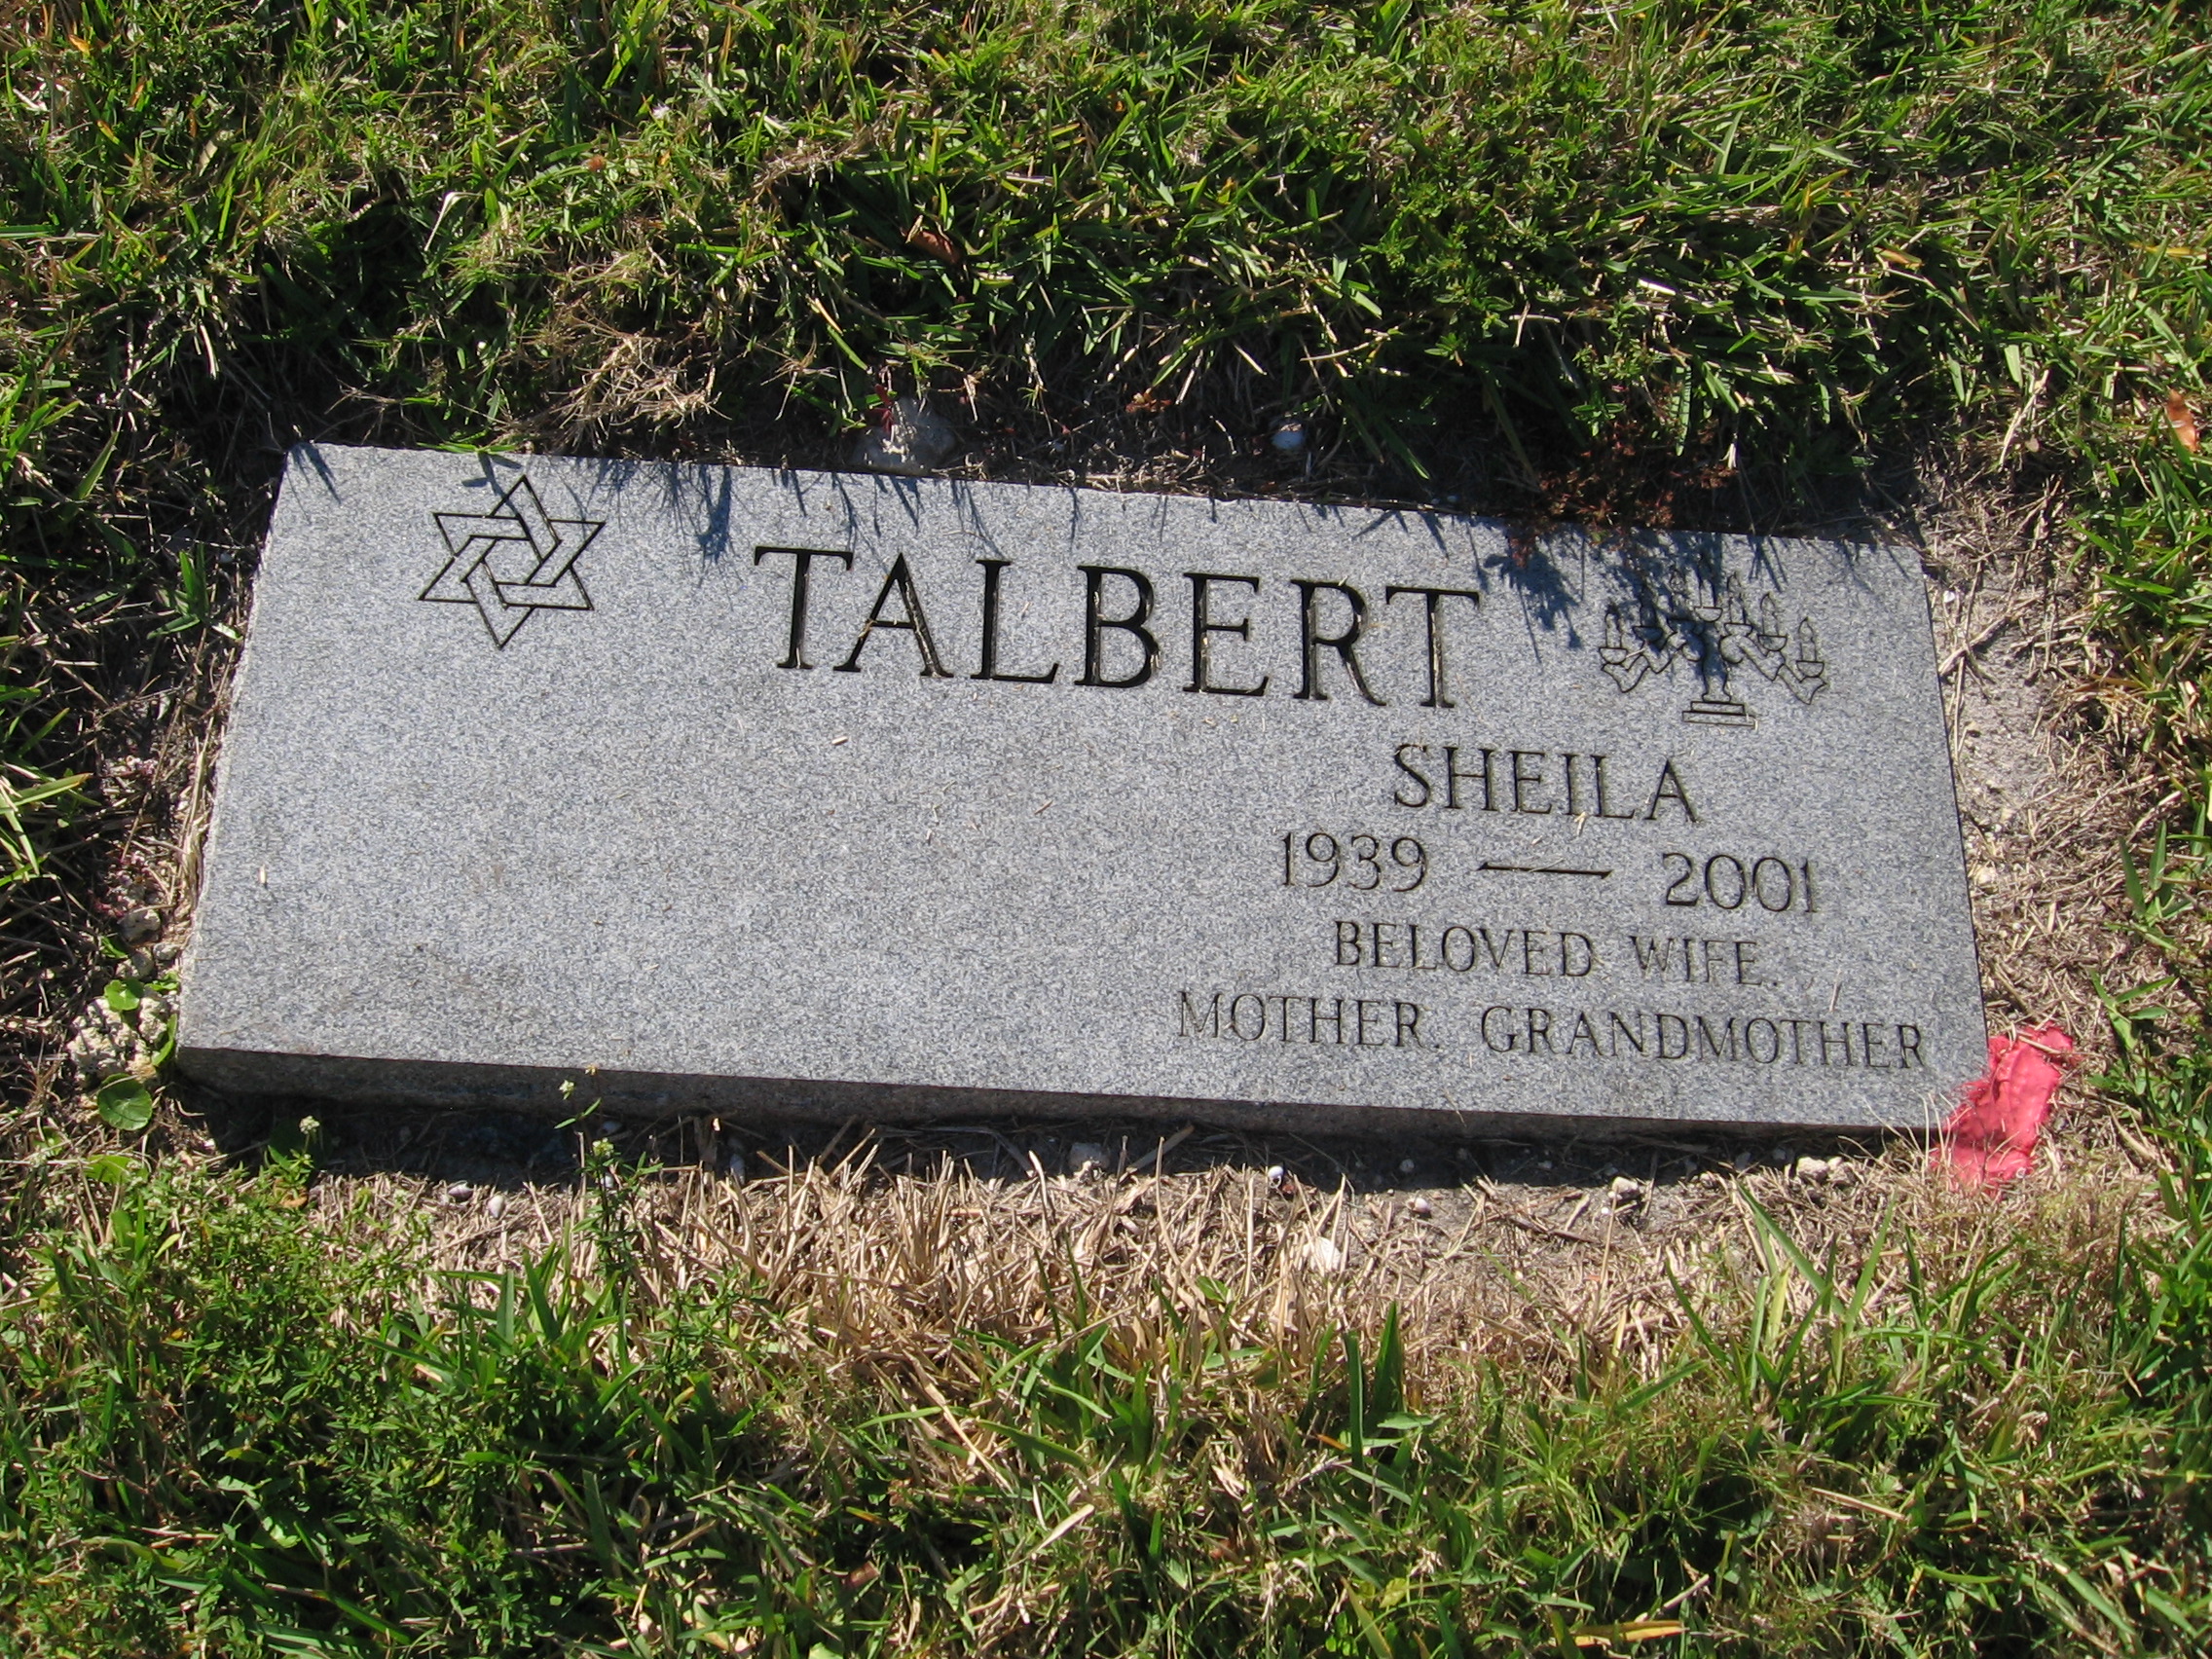 Sheila Talbert